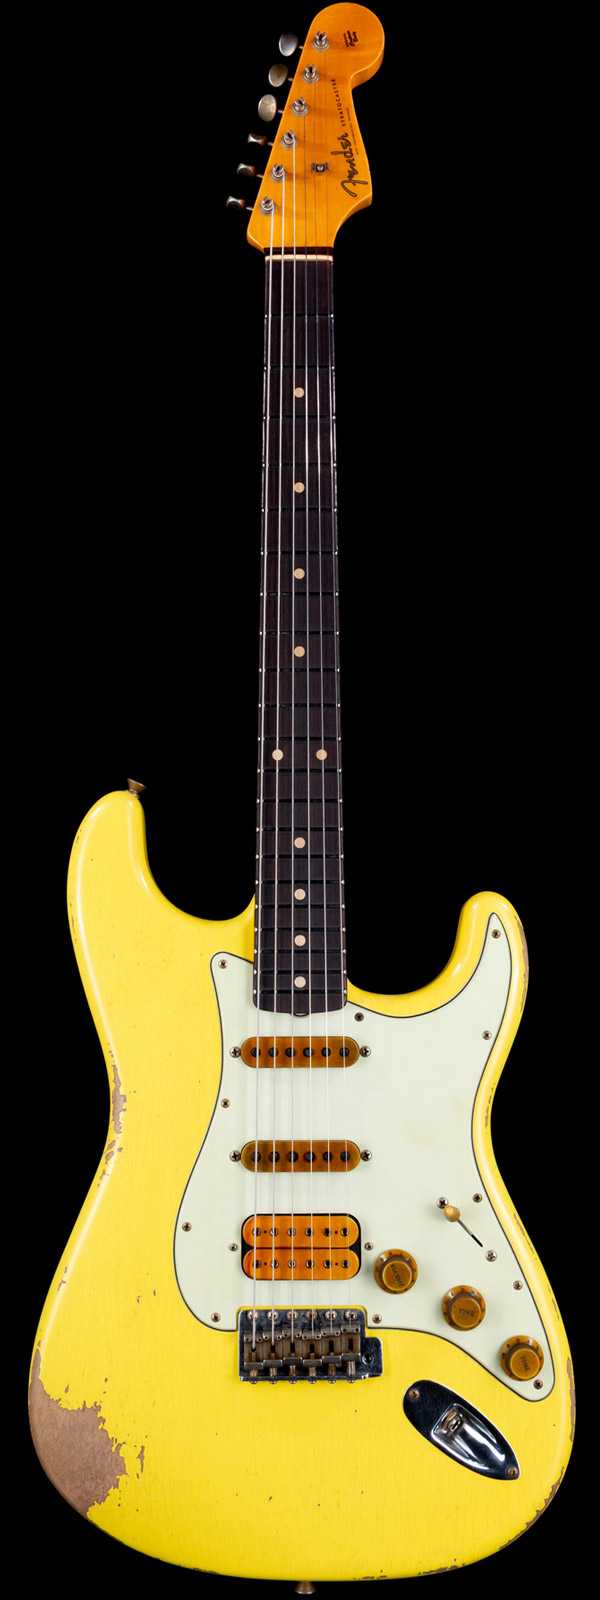 Fender Custom Shop Alley Cat Stratocaster 2.0 Heavy Relic HSS Rosewood Board Vintage Trem Graffiti Yellow